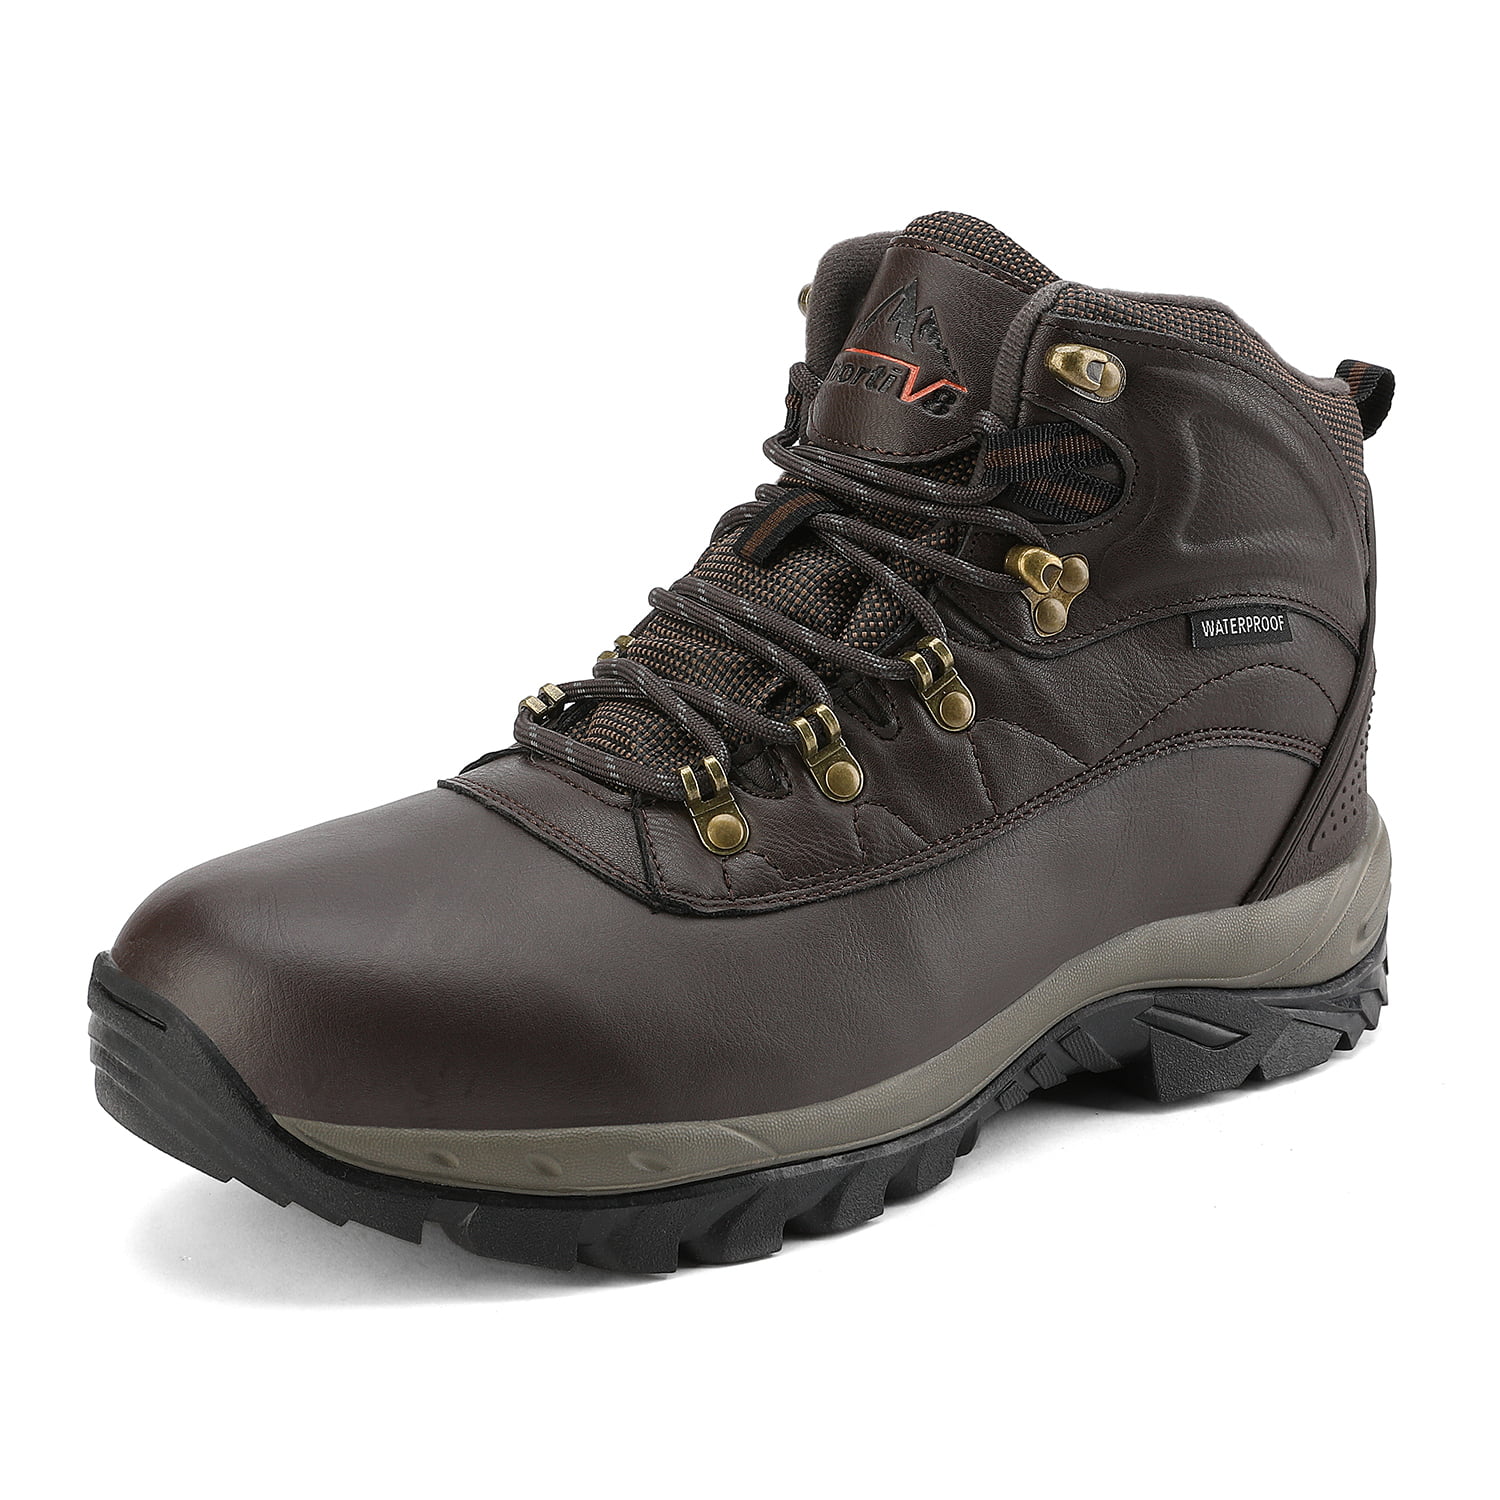 NORTIV 8 Men/'s Waterproof Hiking Shoes Low Top Lightweight Outdoor Trekking Camping Trail Hiking Shoes